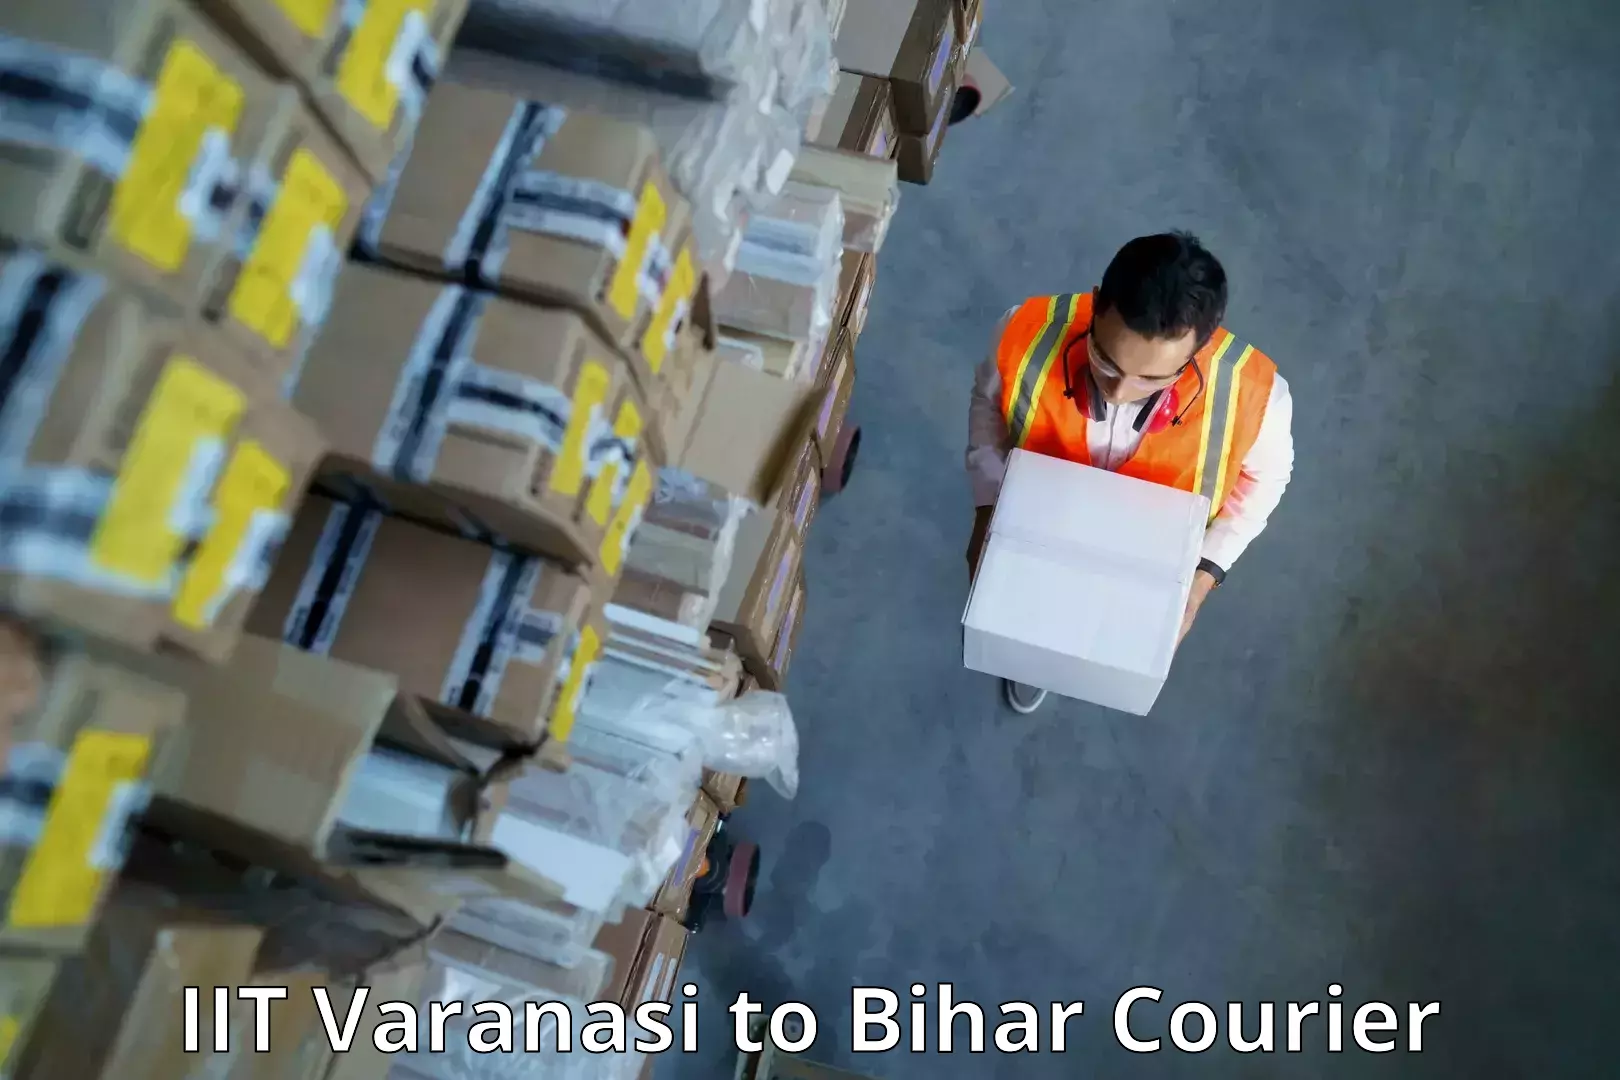 Courier service comparison IIT Varanasi to Aurangabad Bihar